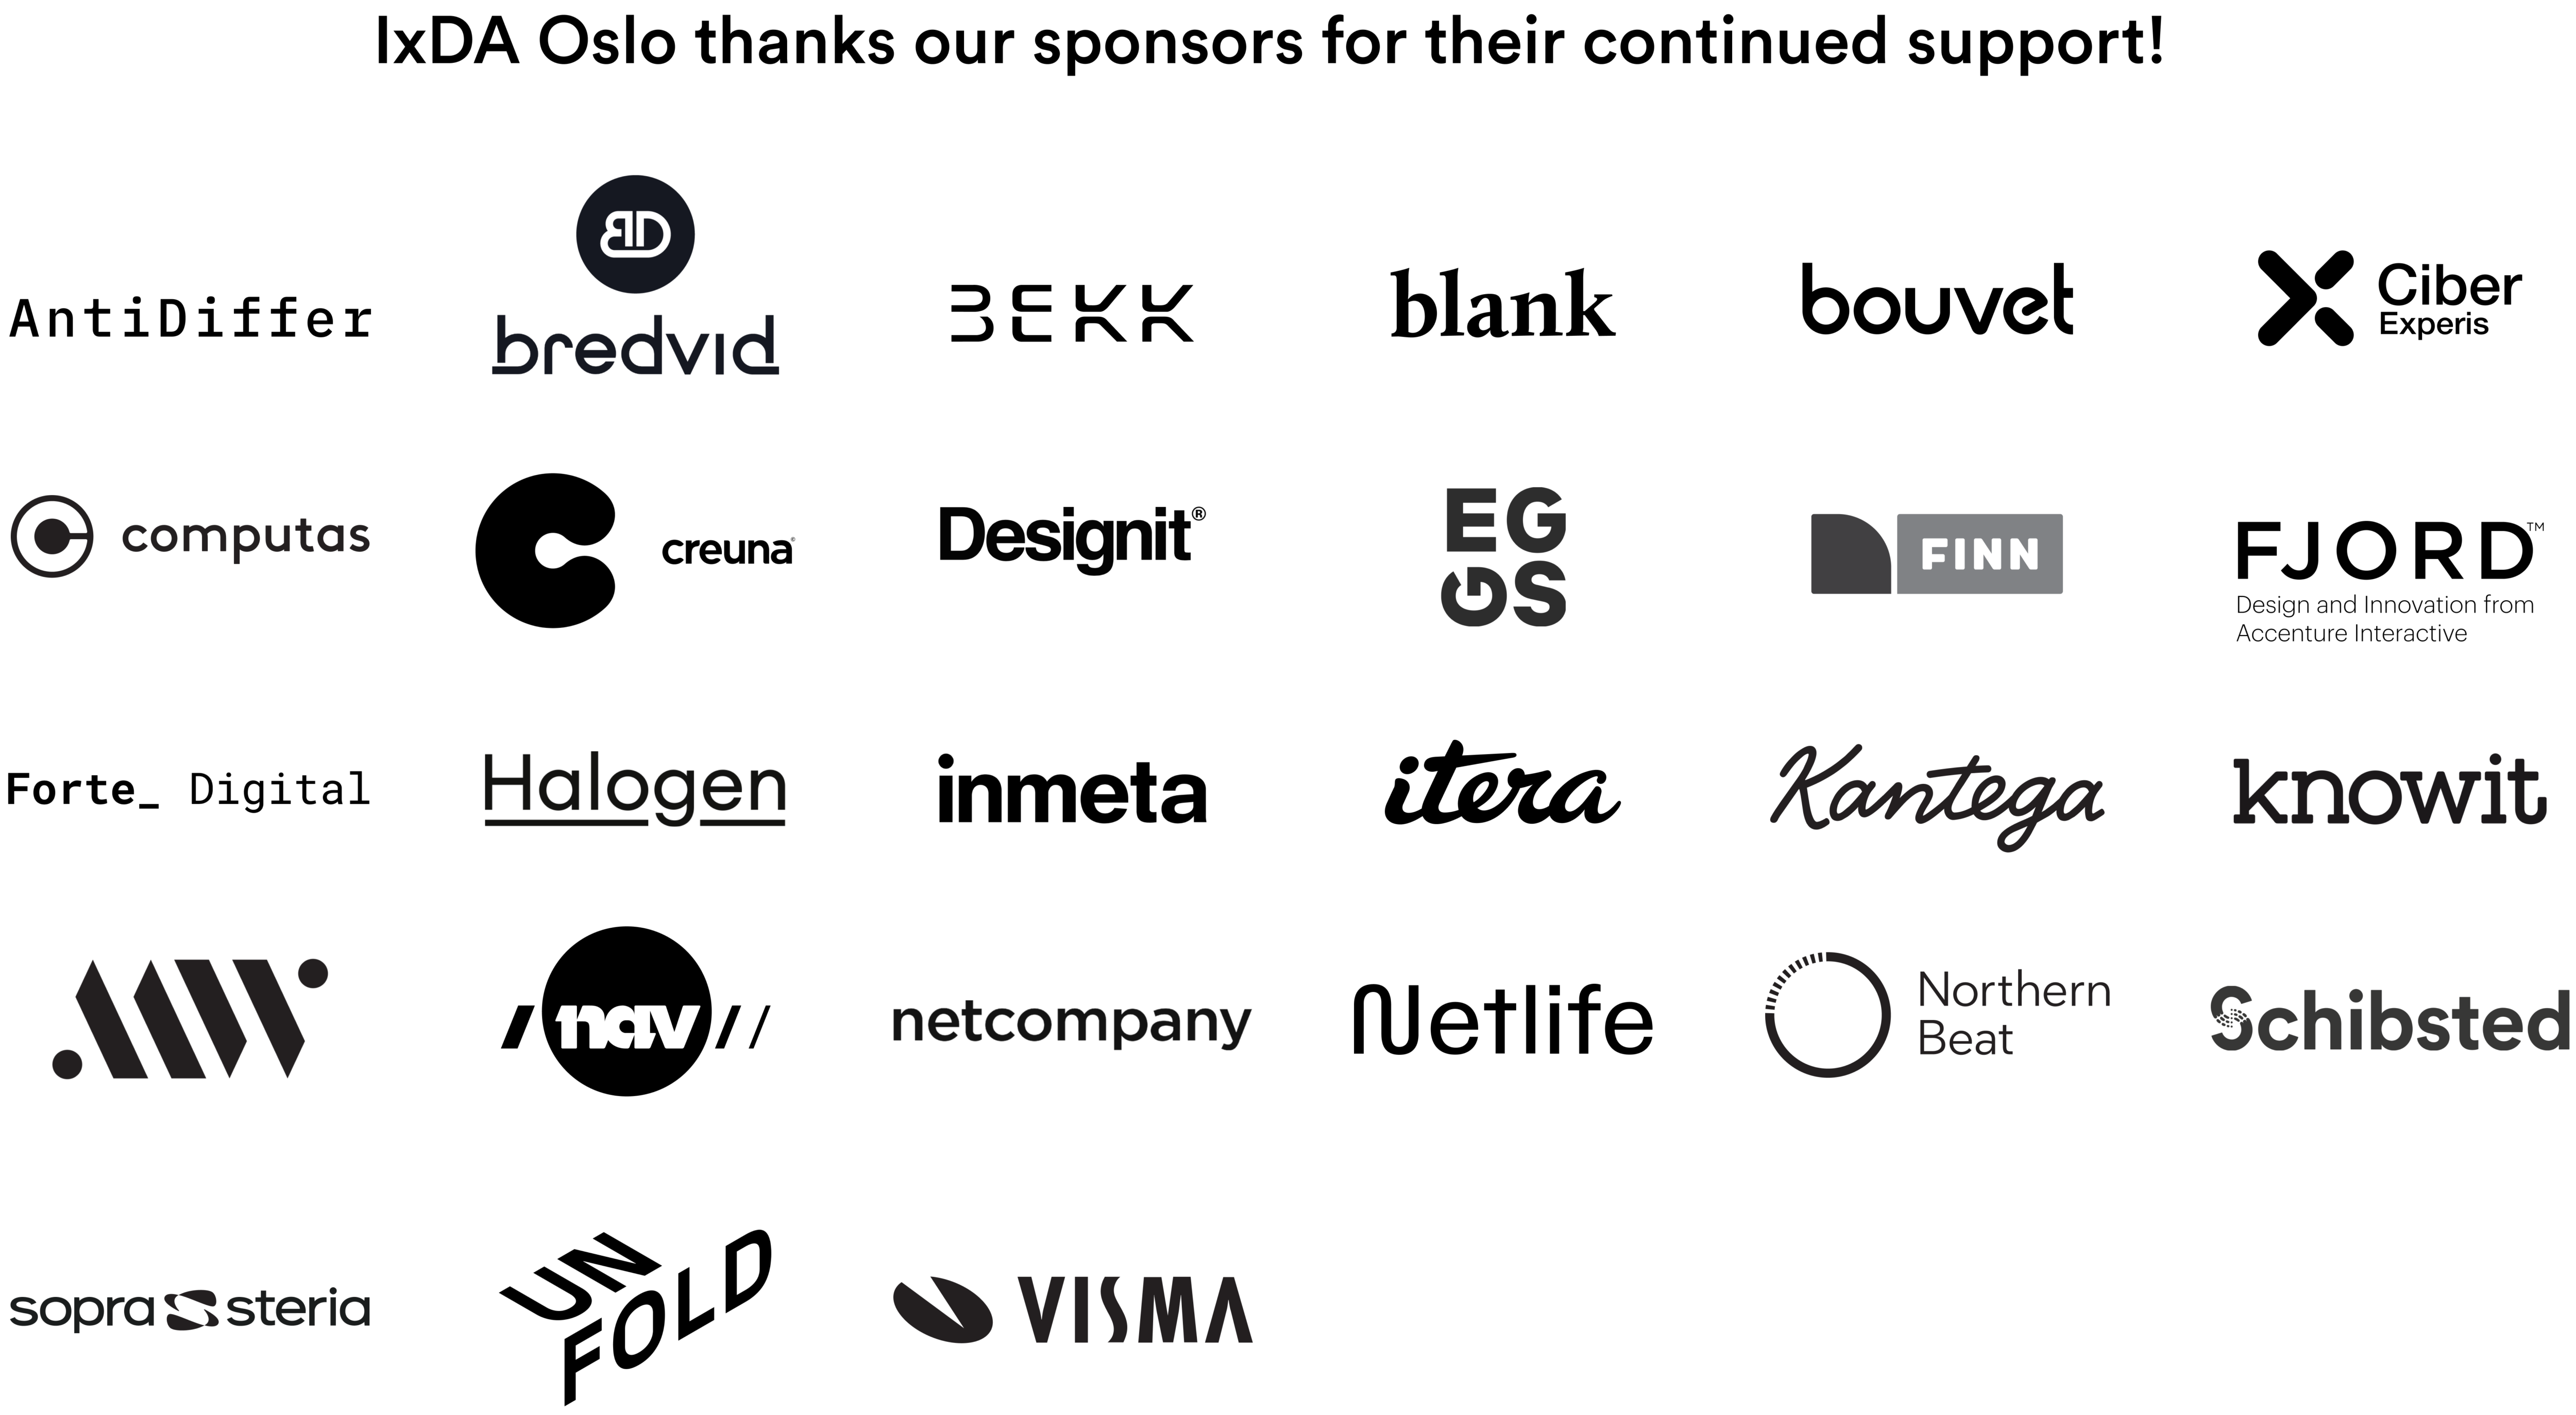 Image shows the logos of IxDA Oslo's 27 sponsors